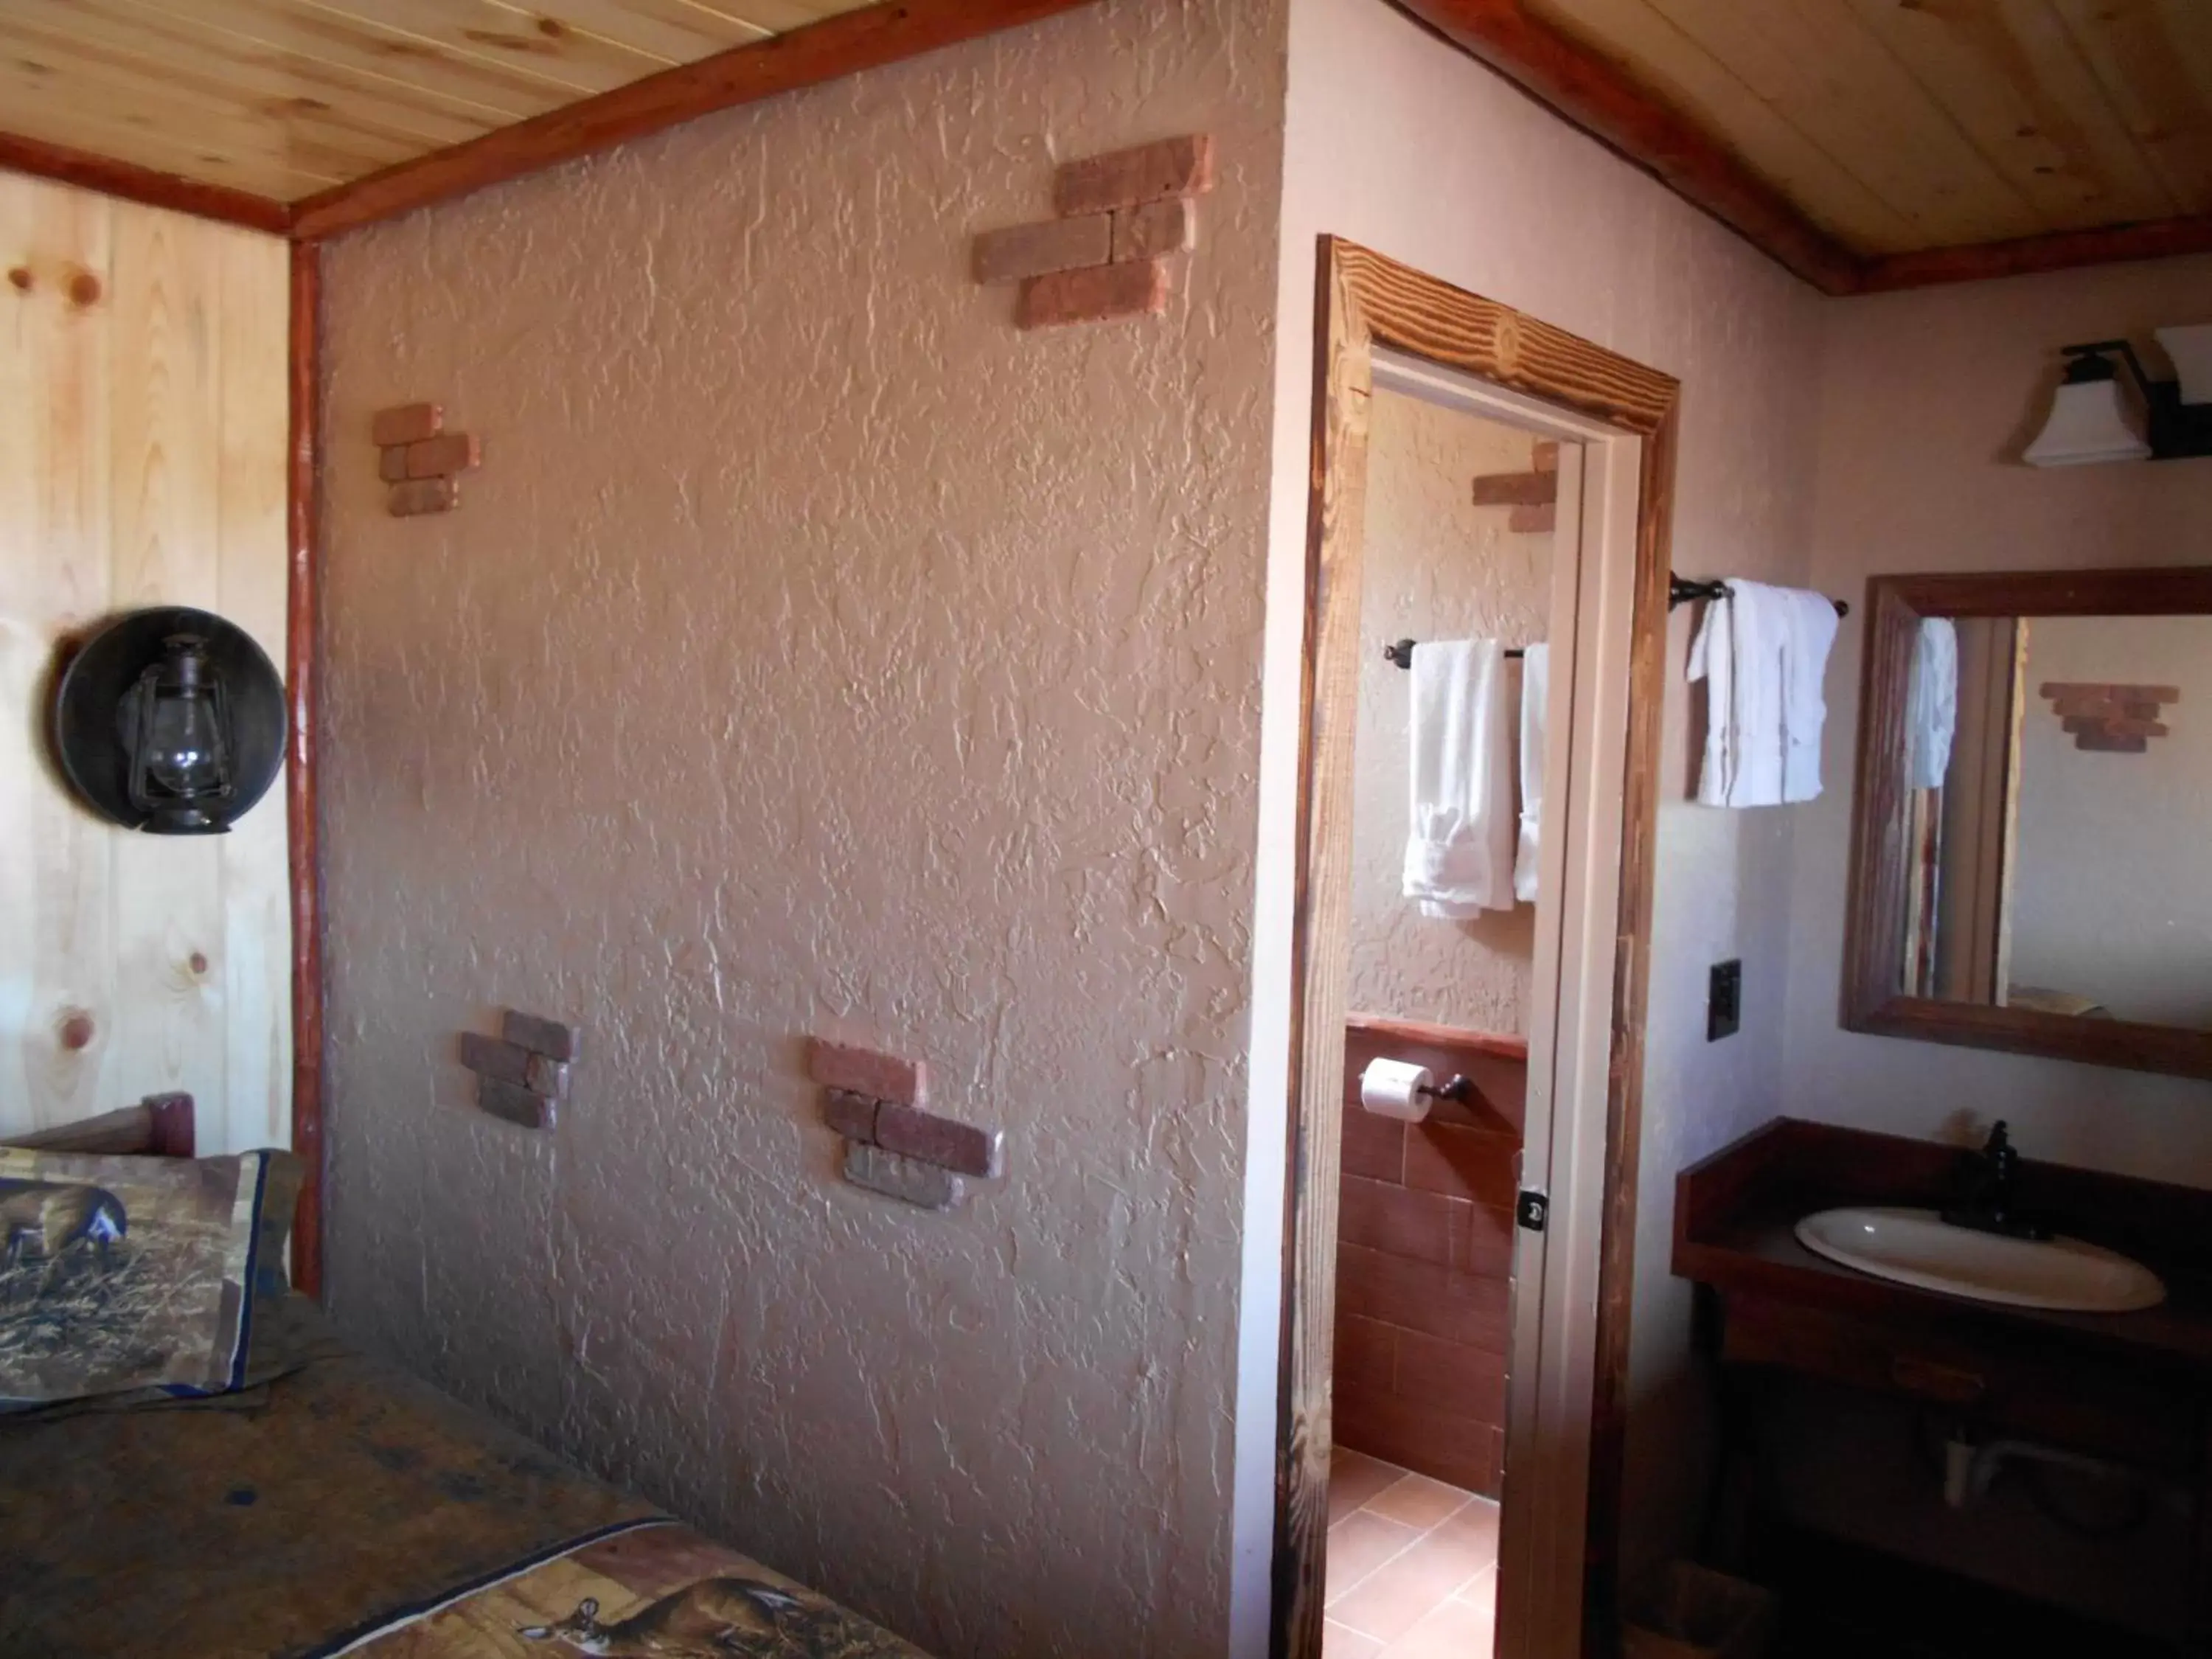 Bathroom in Grand Canyon Inn and Motel - South Rim Entrance